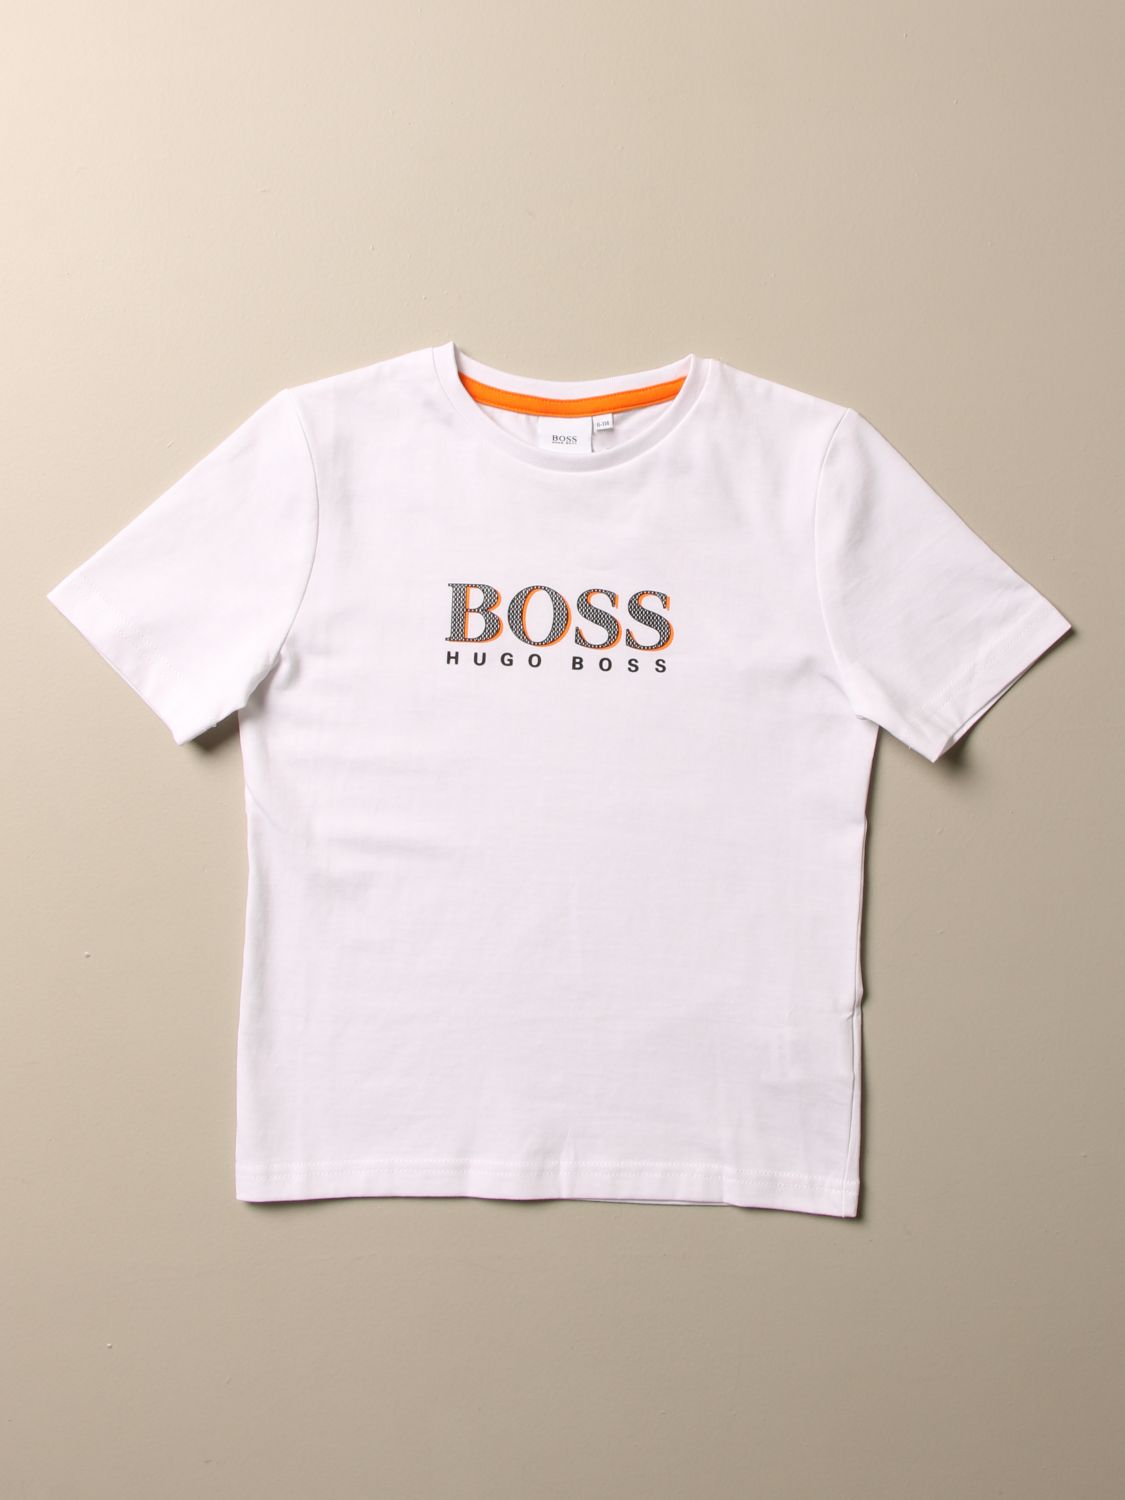 hugo boss t shirts